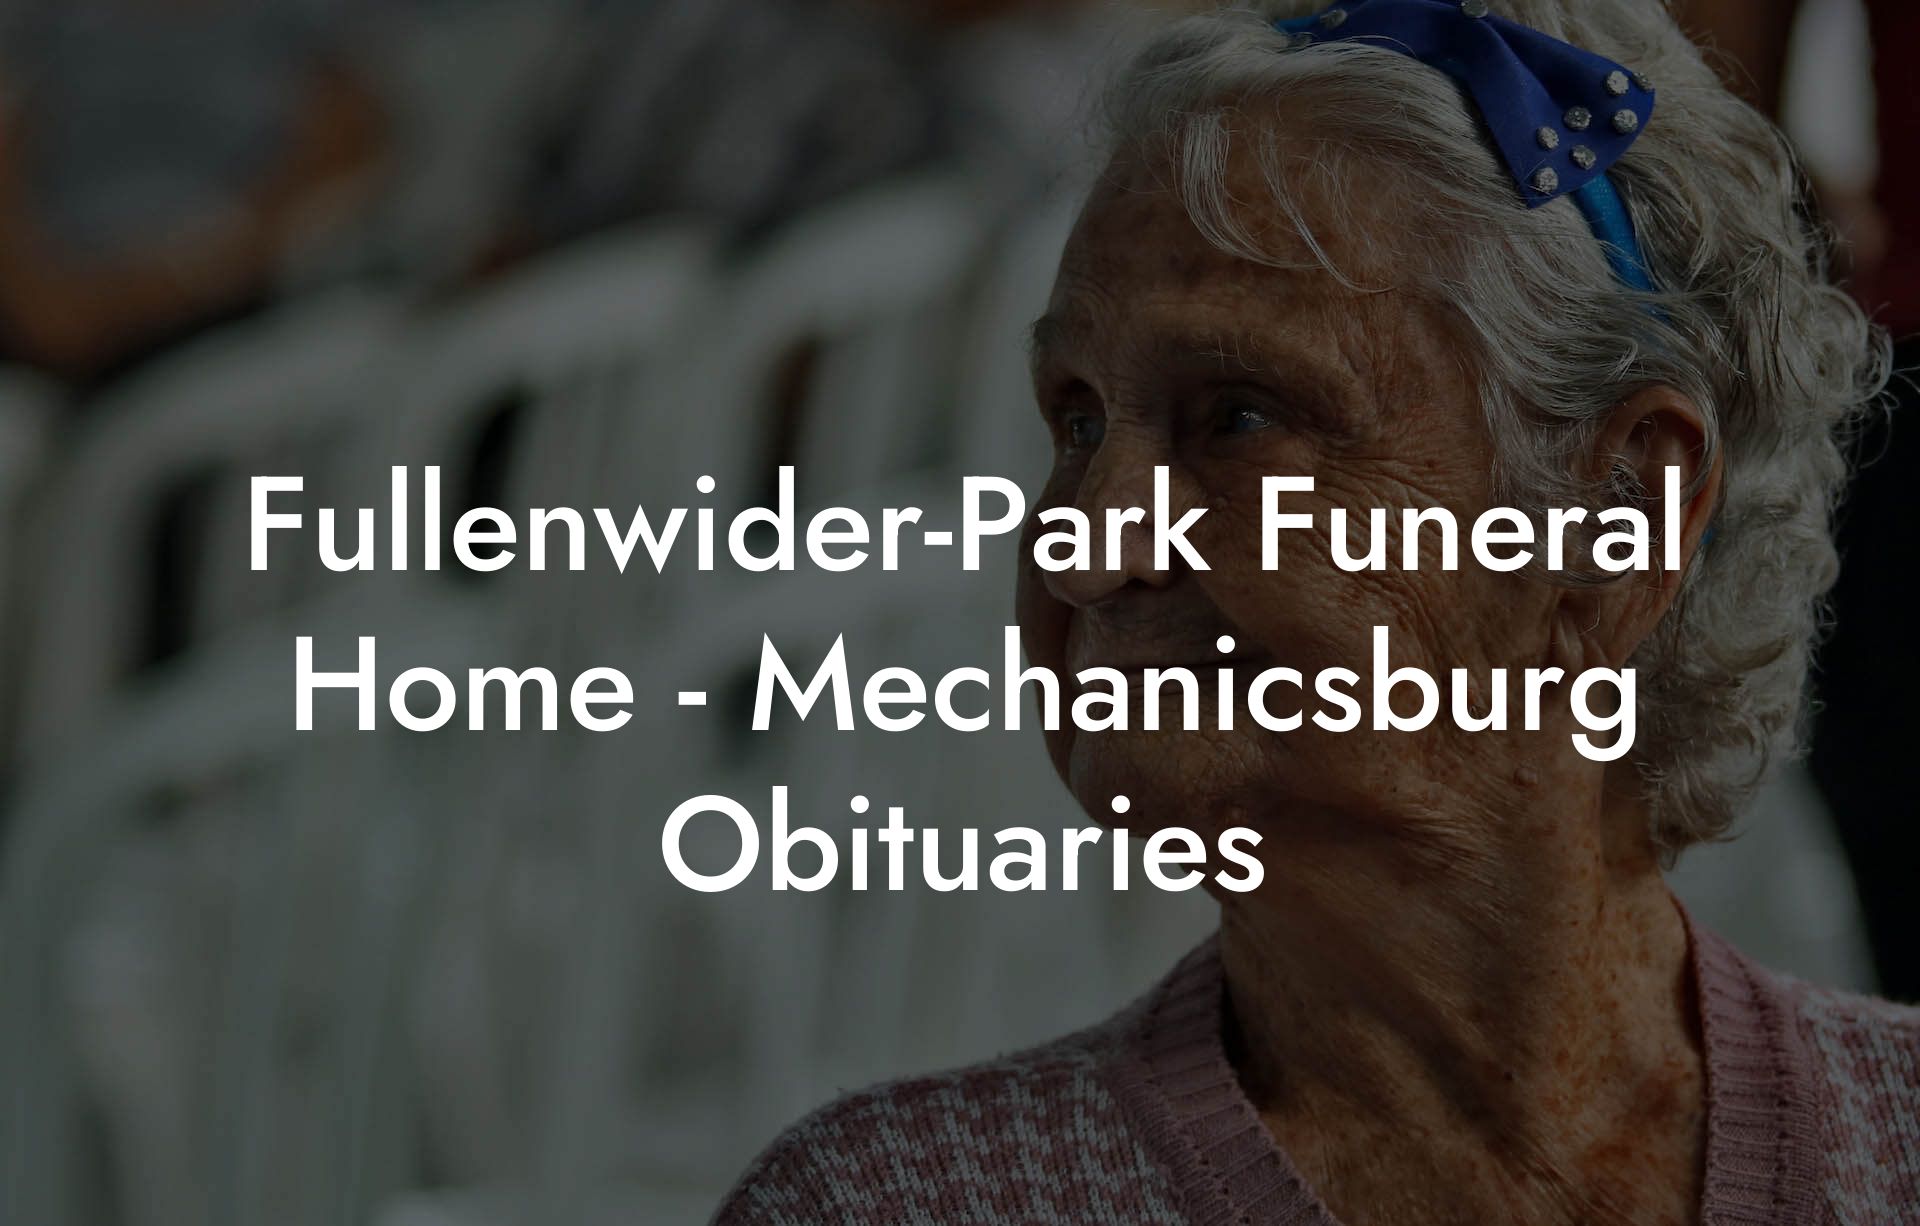 Fullenwider-Park Funeral Home - Mechanicsburg Obituaries